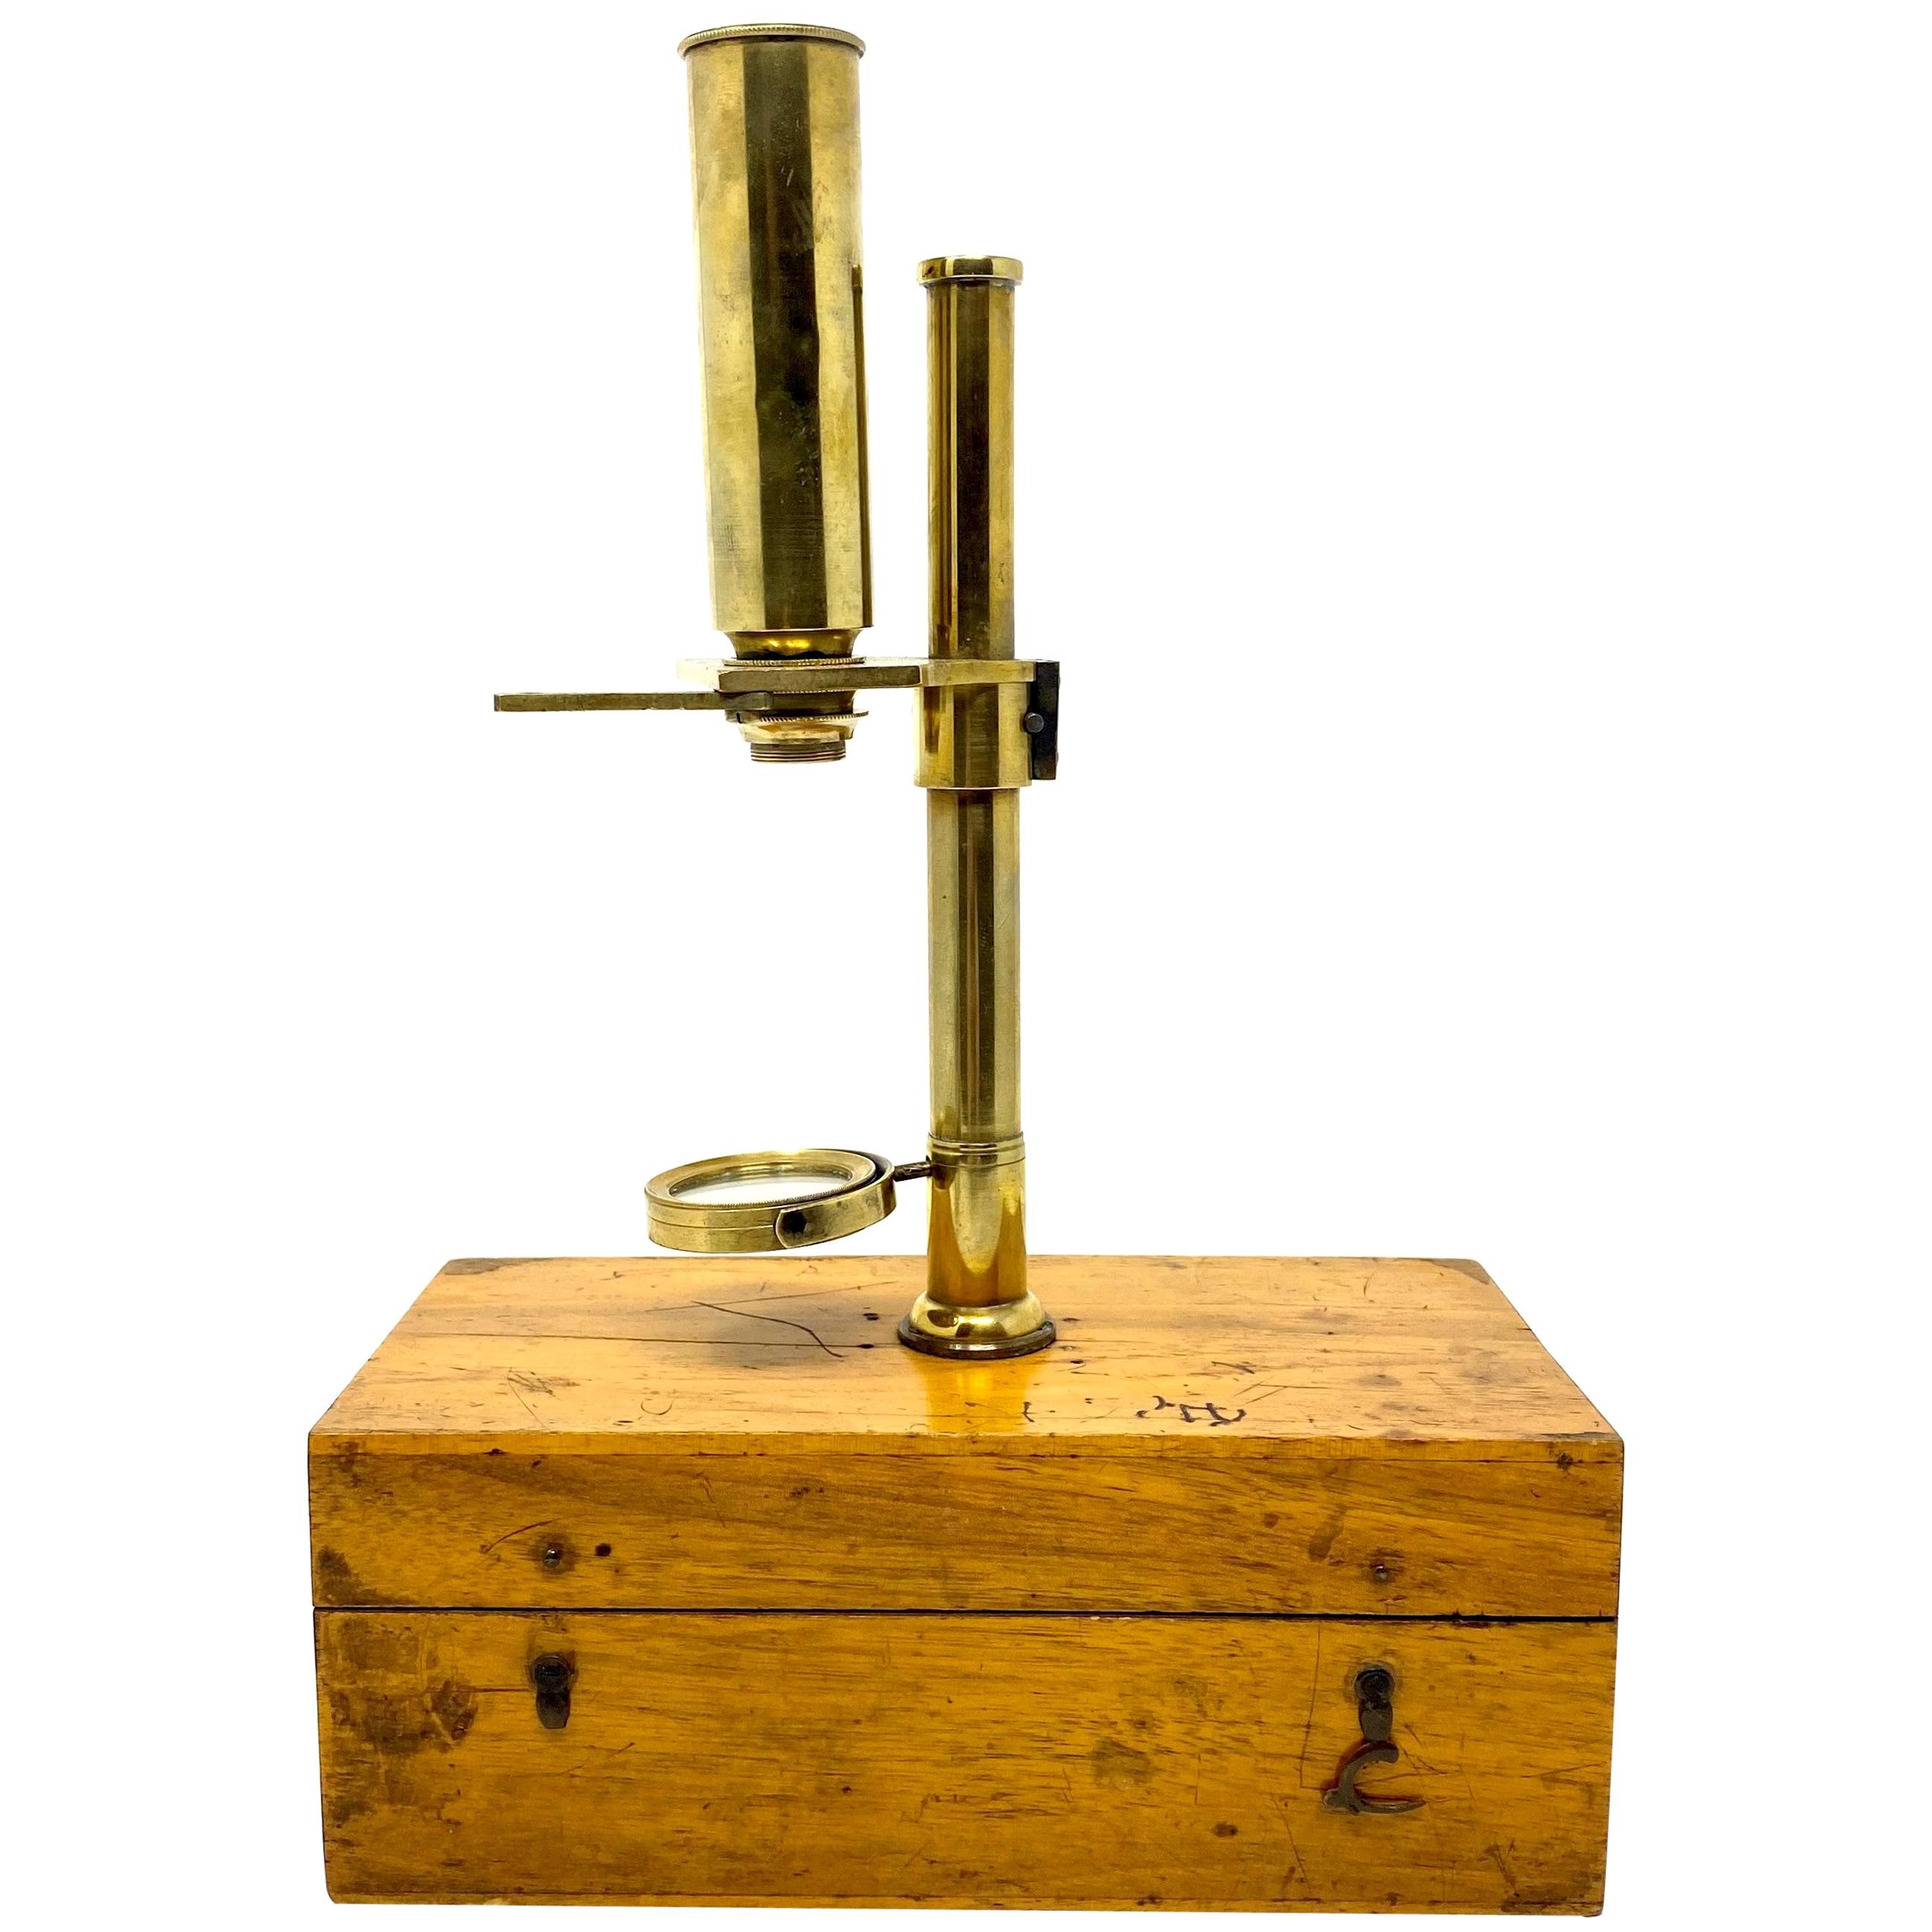 Antique English Brass Field Microscope in Original Case, circa 1890-1900